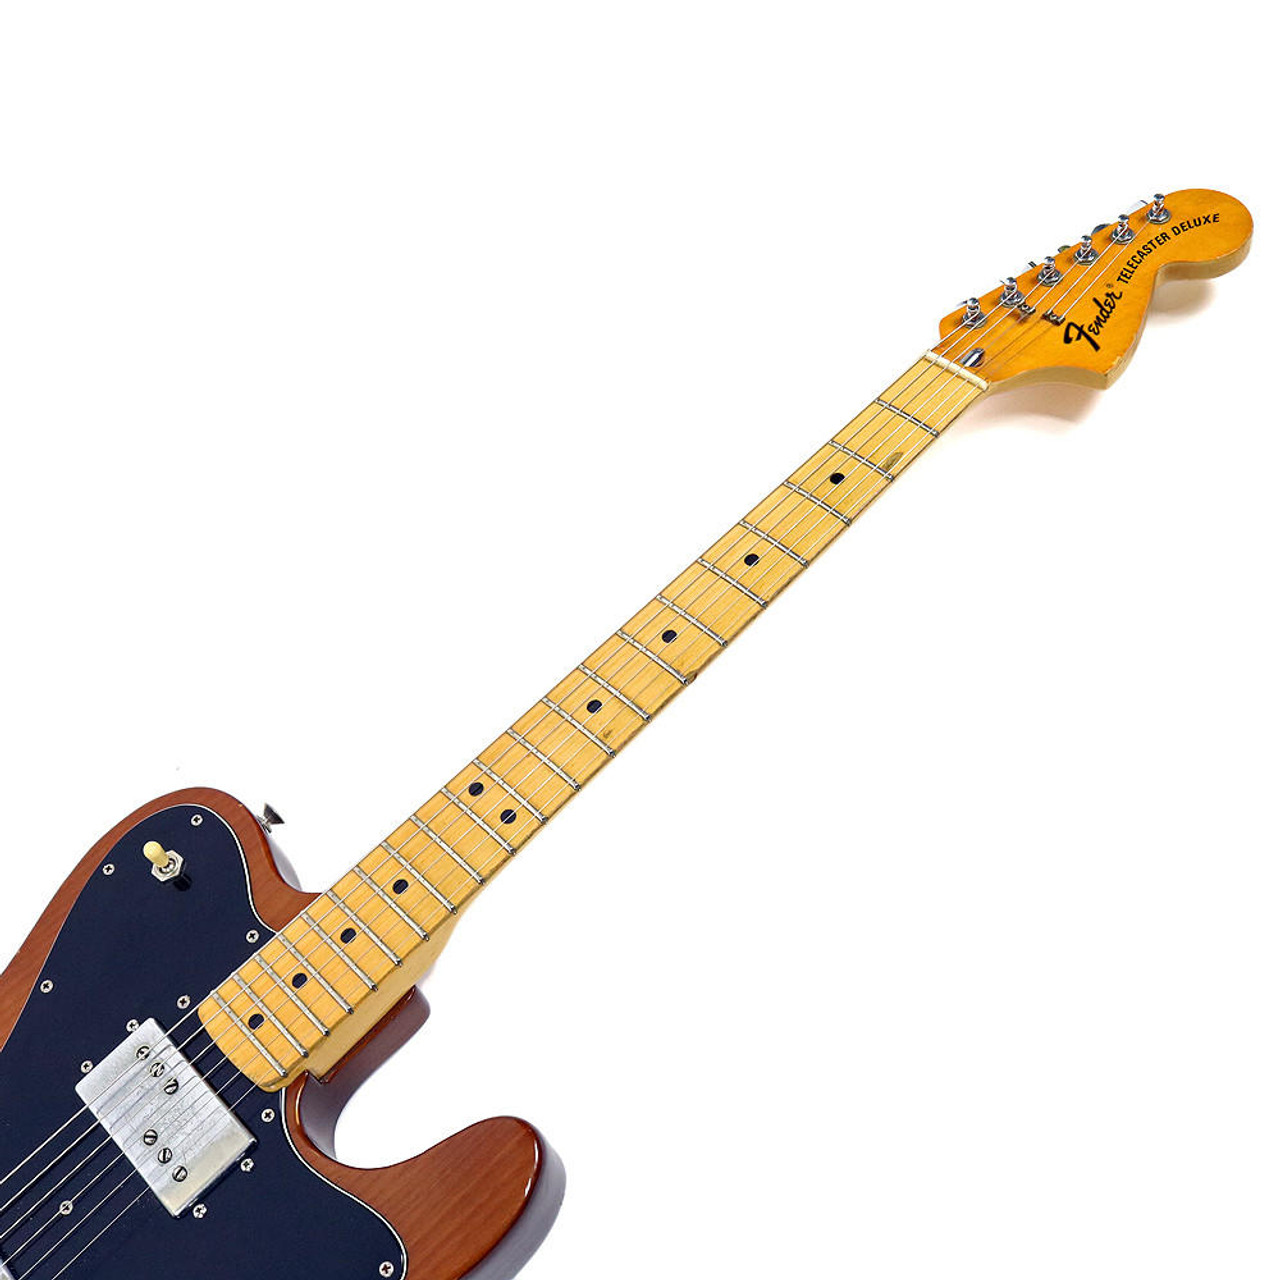 Vintage 1974 Fender Telecaster Deluxe Electric Guitar Walnut Finish